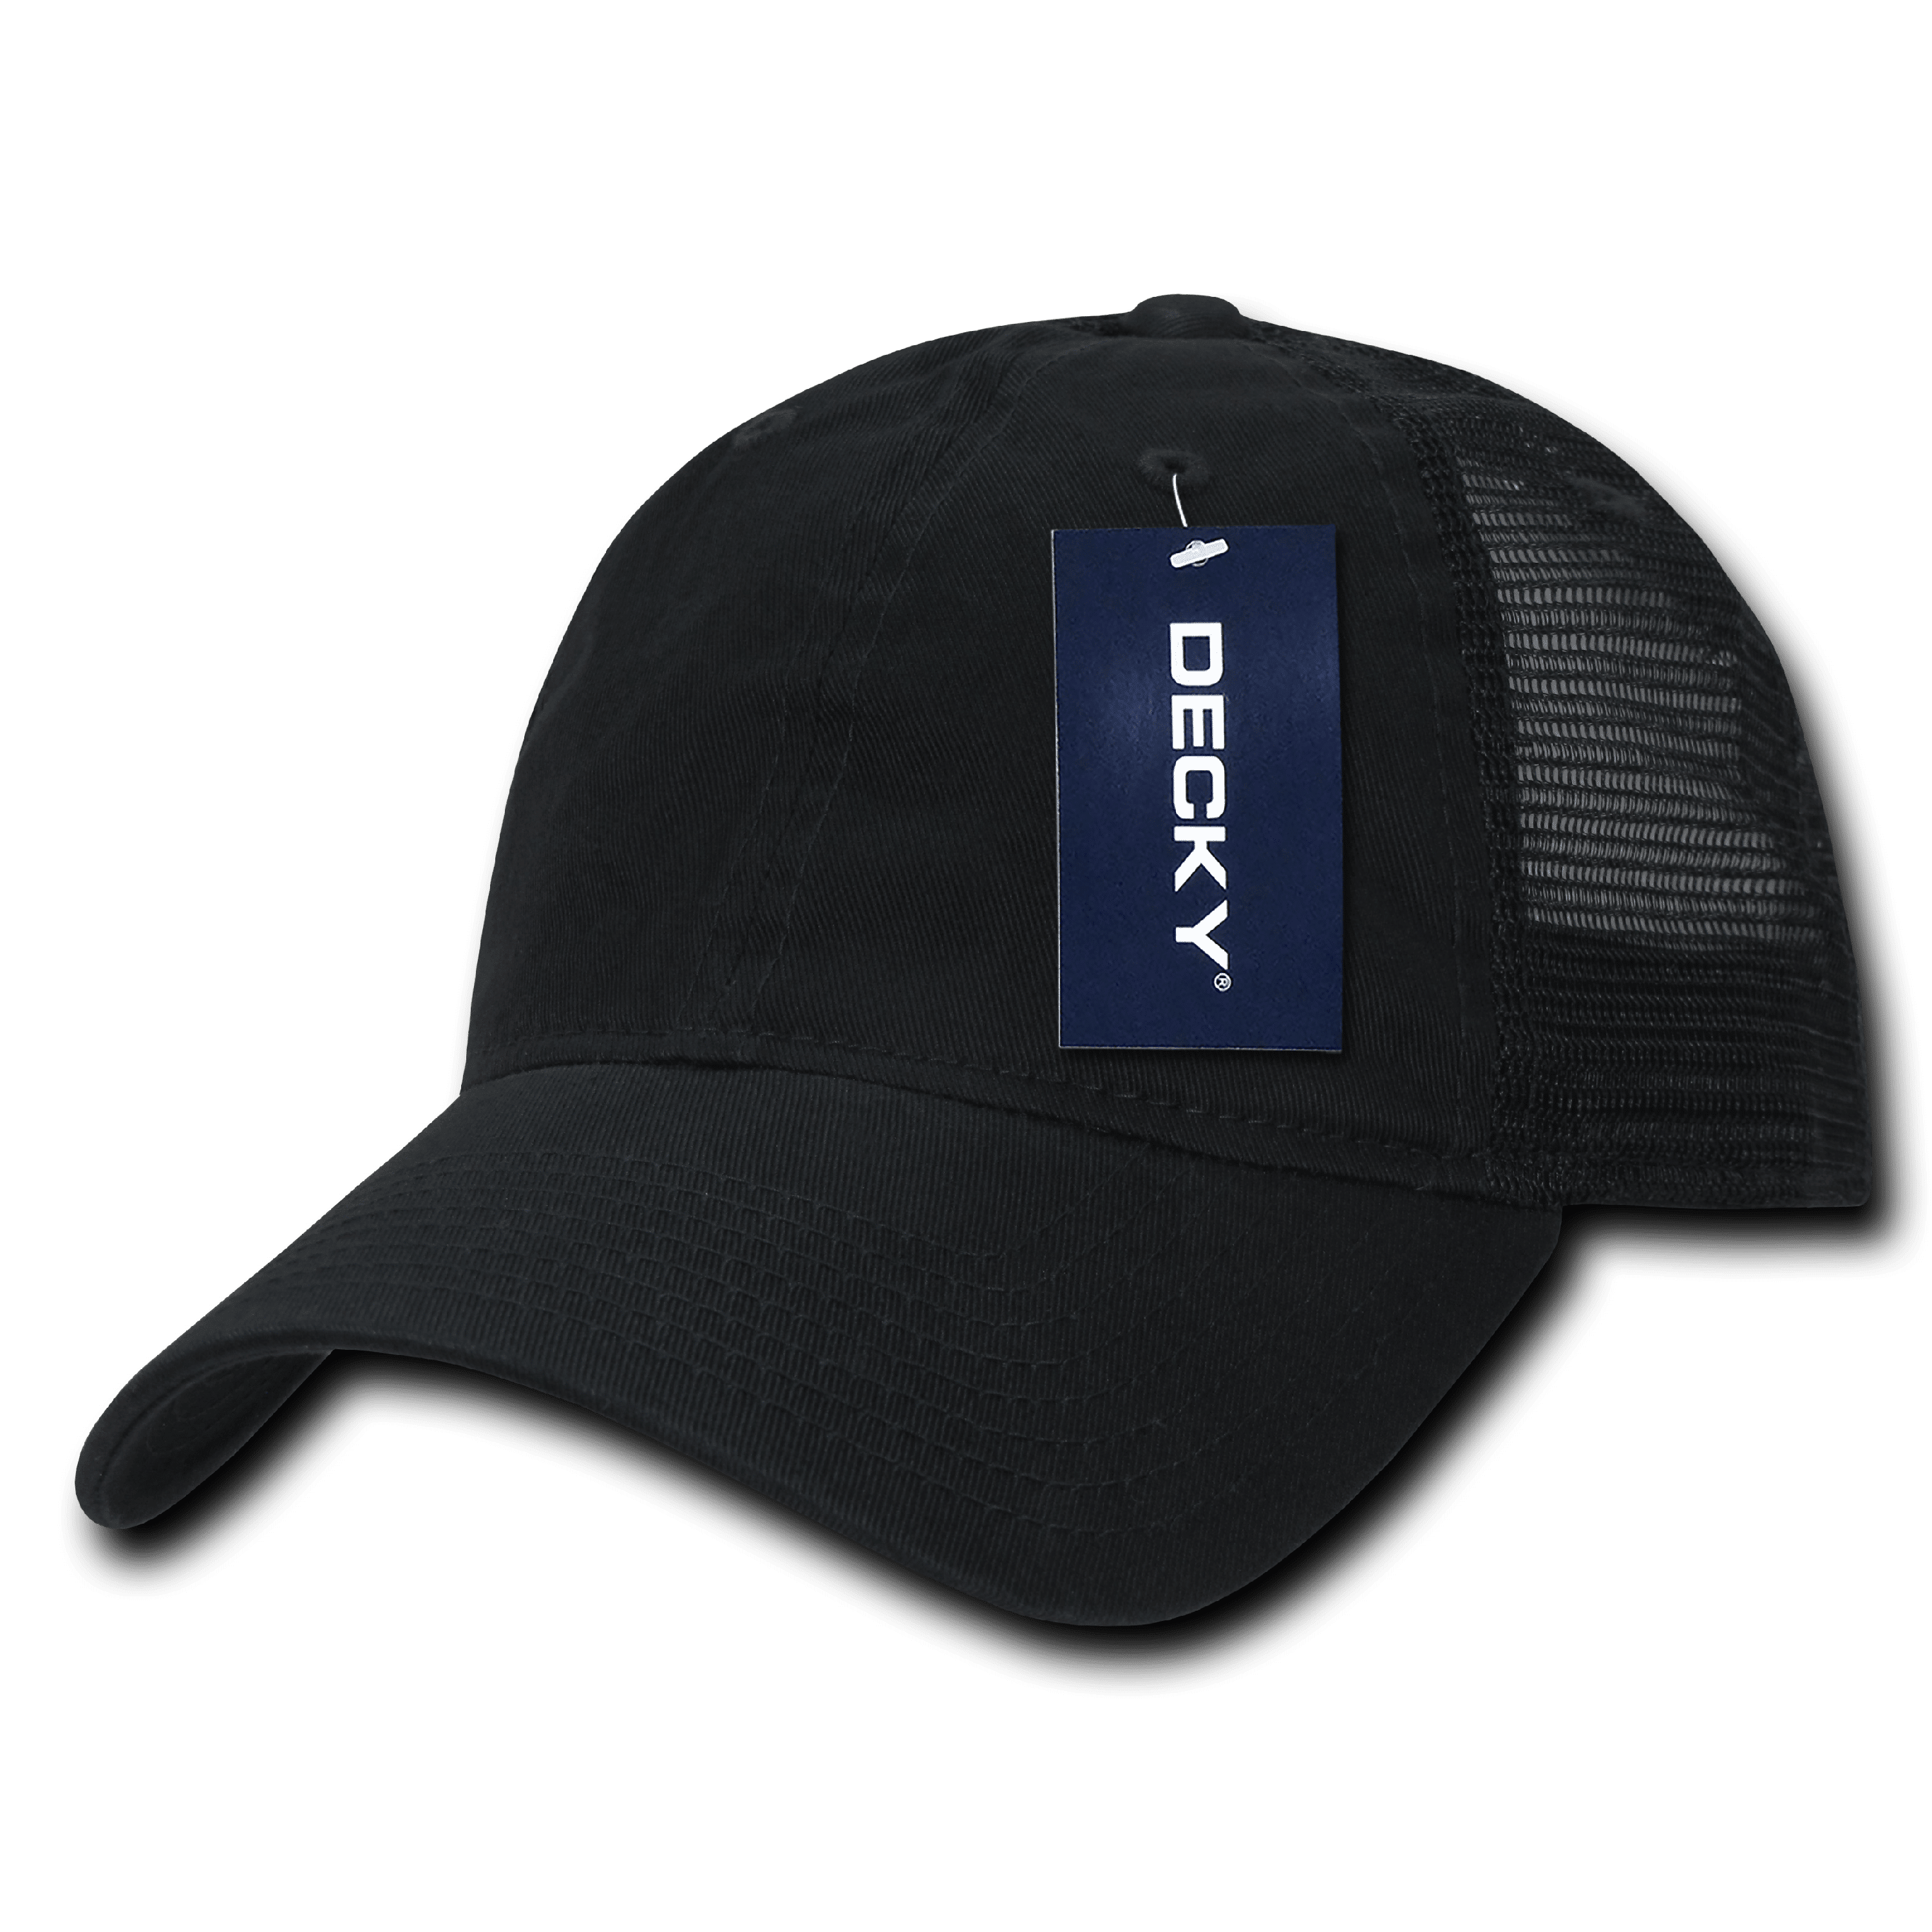 Relaxed Bill Hats Cap Hat Pre Curved Trucker Baseball Women Decky Black For Men Caps Snapback